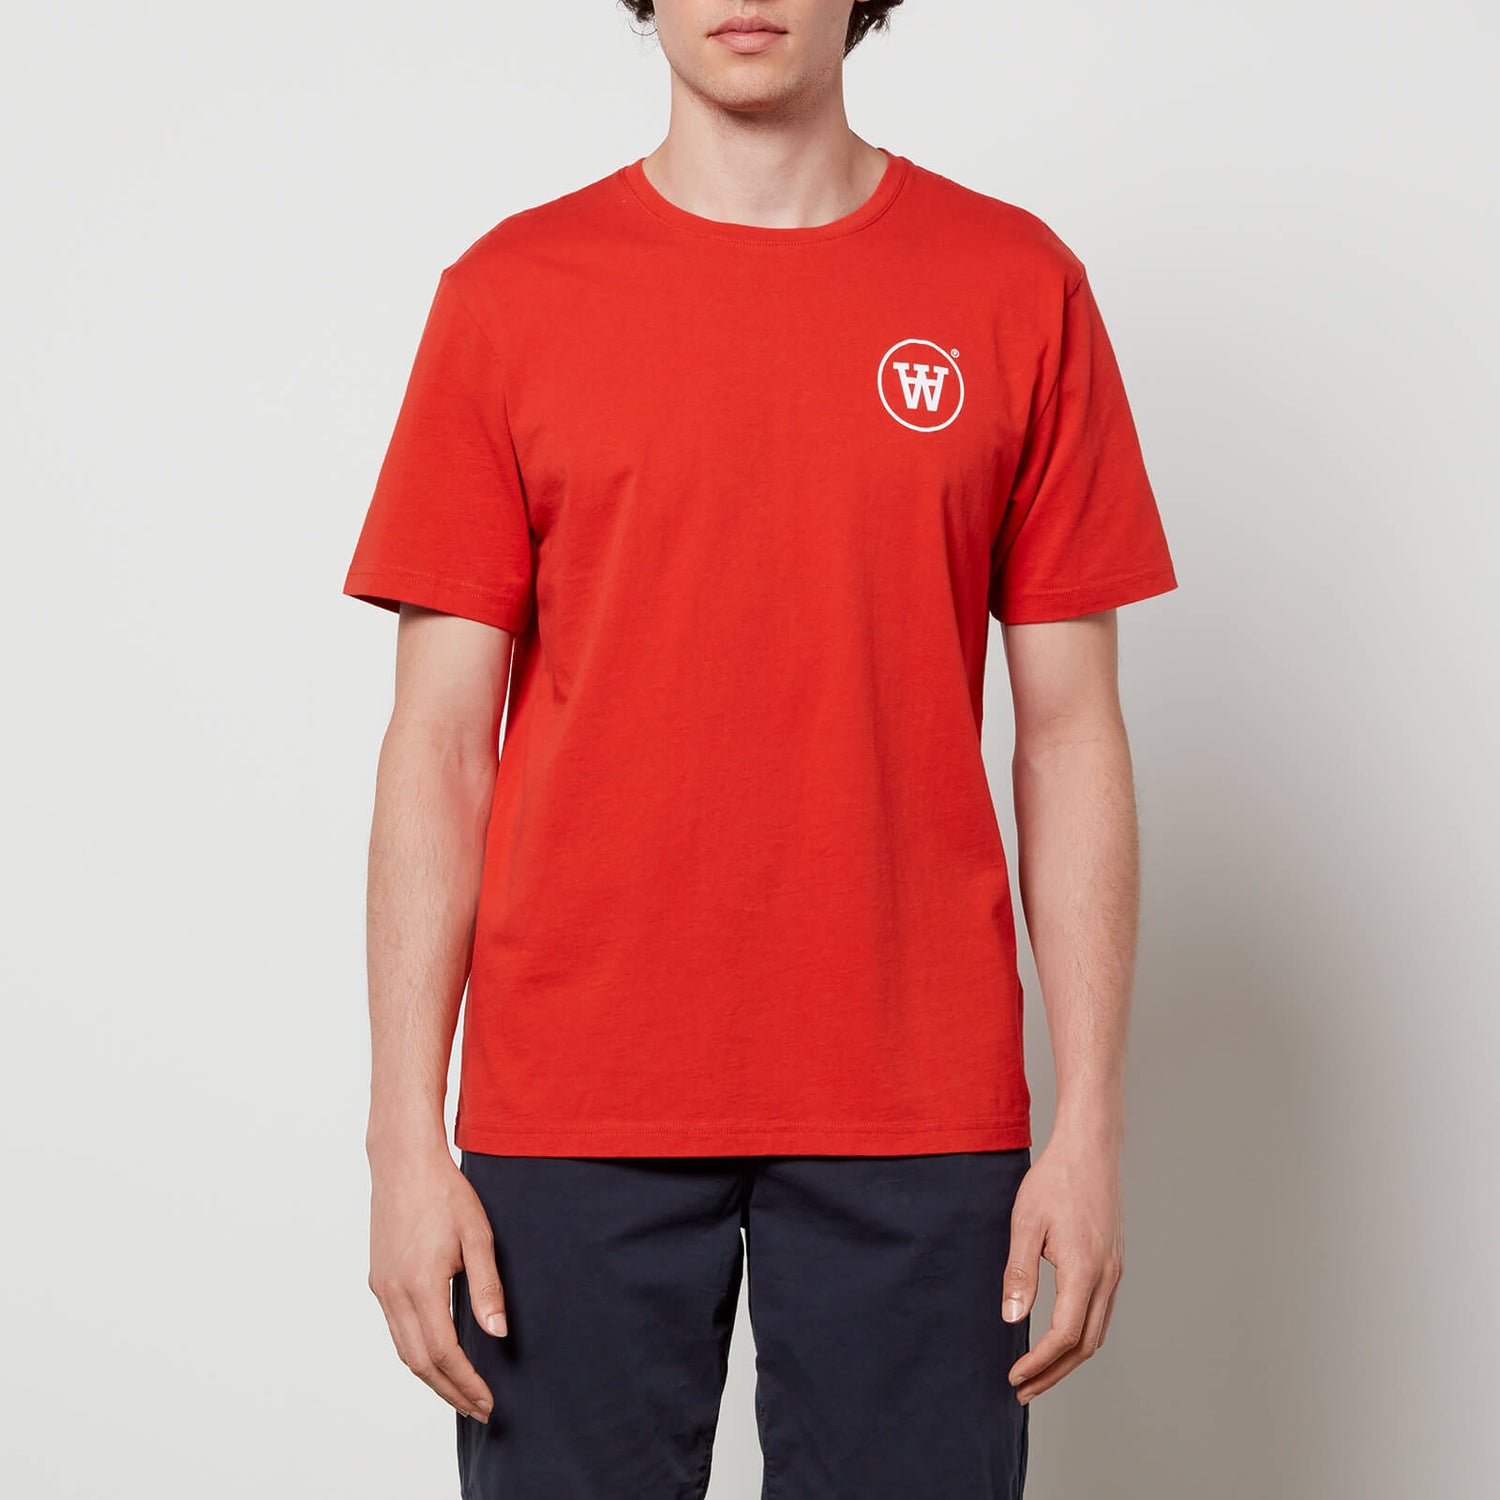 Wood Wood Men's Ace Circle T-Shirt - Chili Red - S